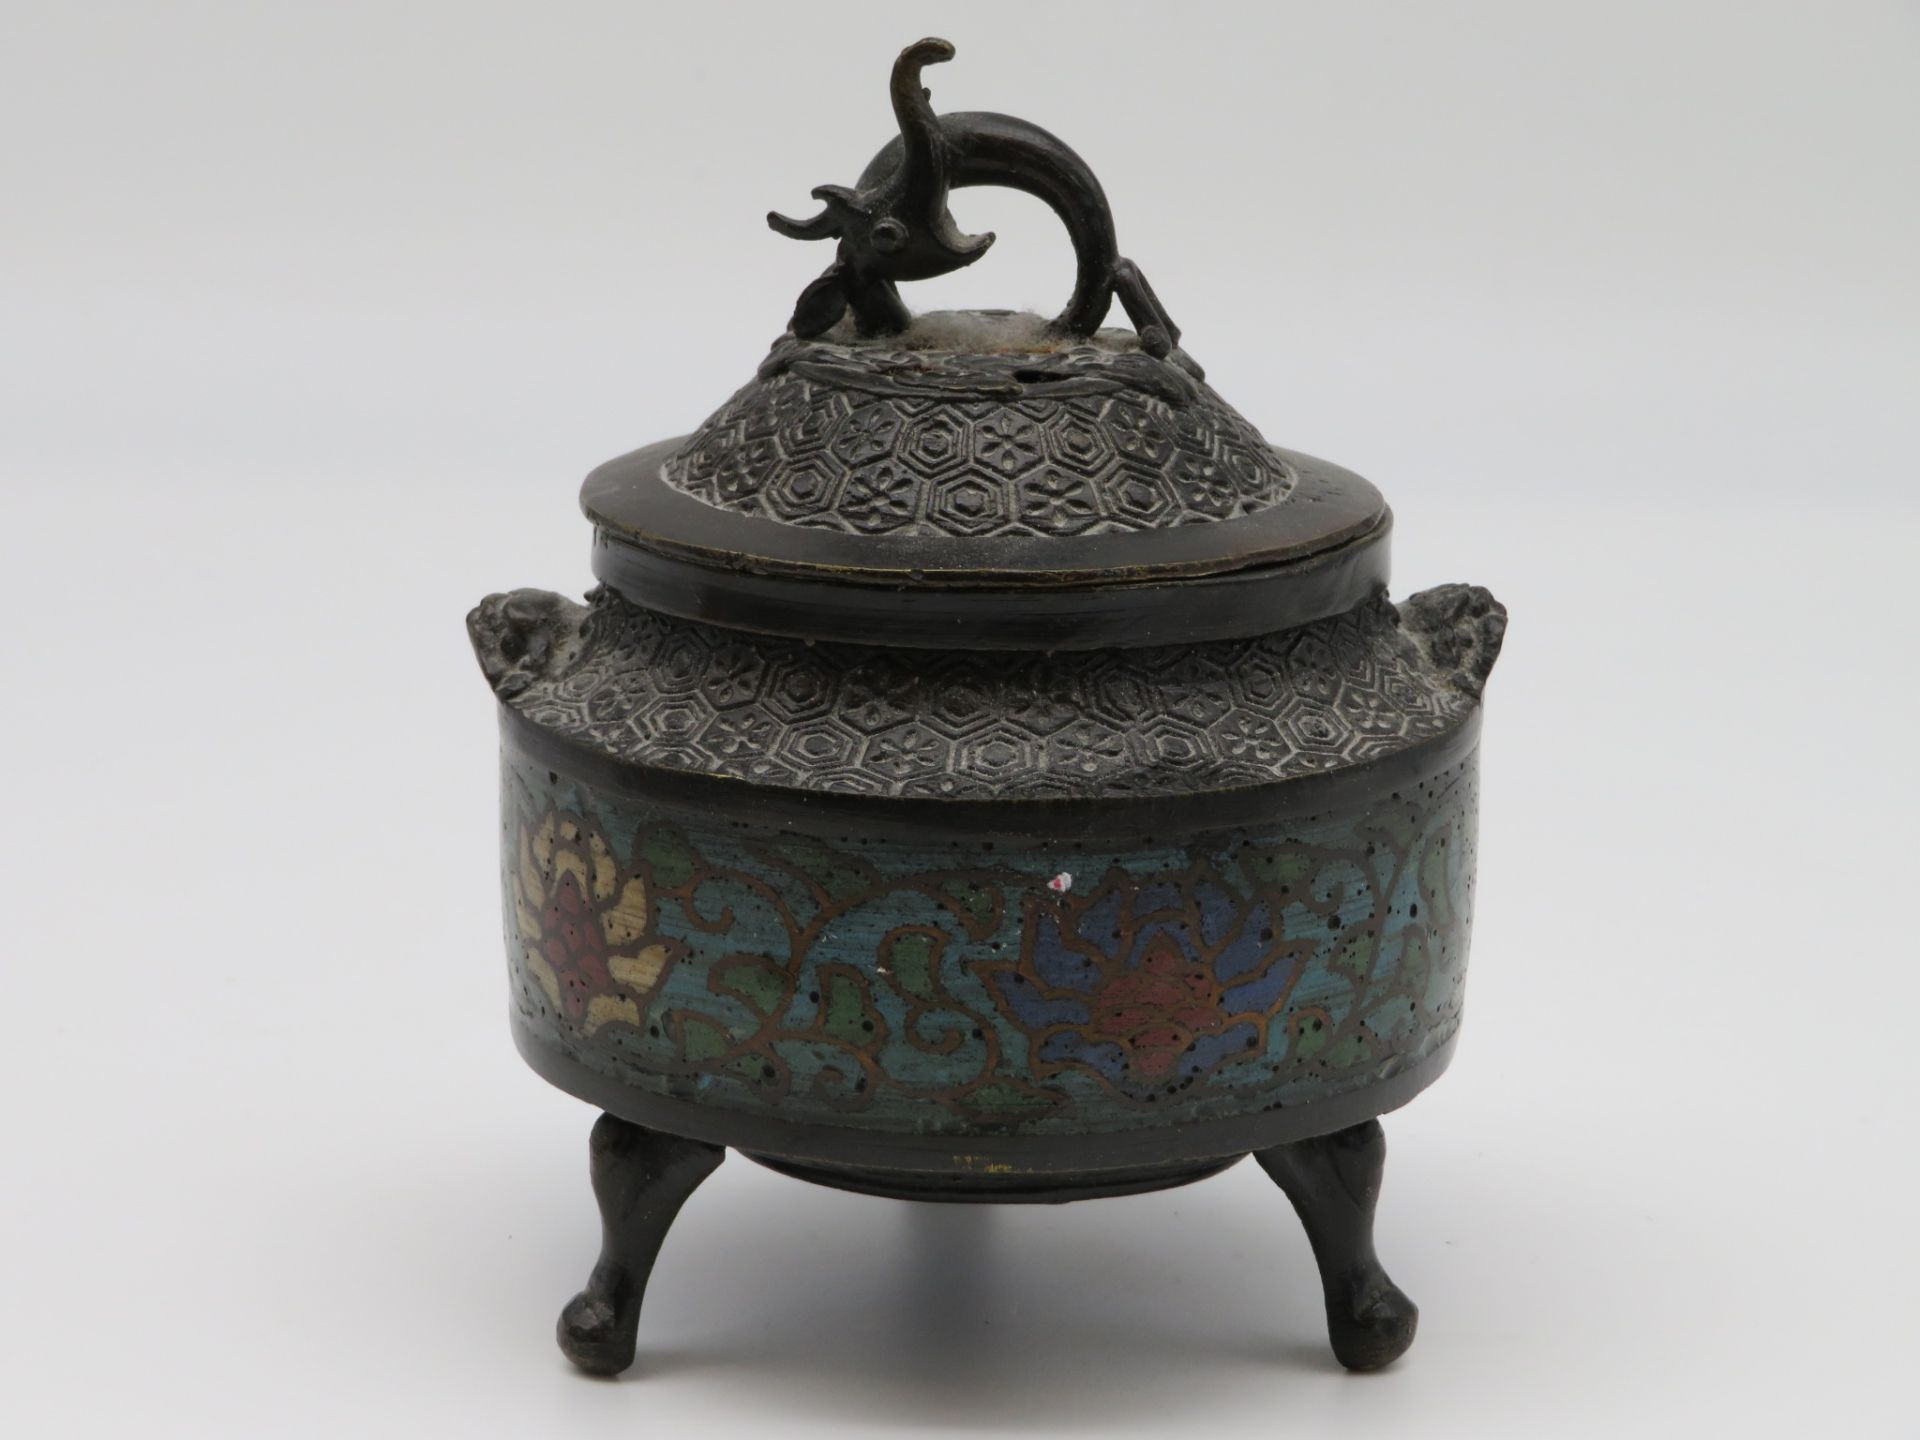 Räuchergefäß, sog. "Koro", China, um 1900, Bronze mit farbigem Cloisonné, h 13 cm, d 11 cm.